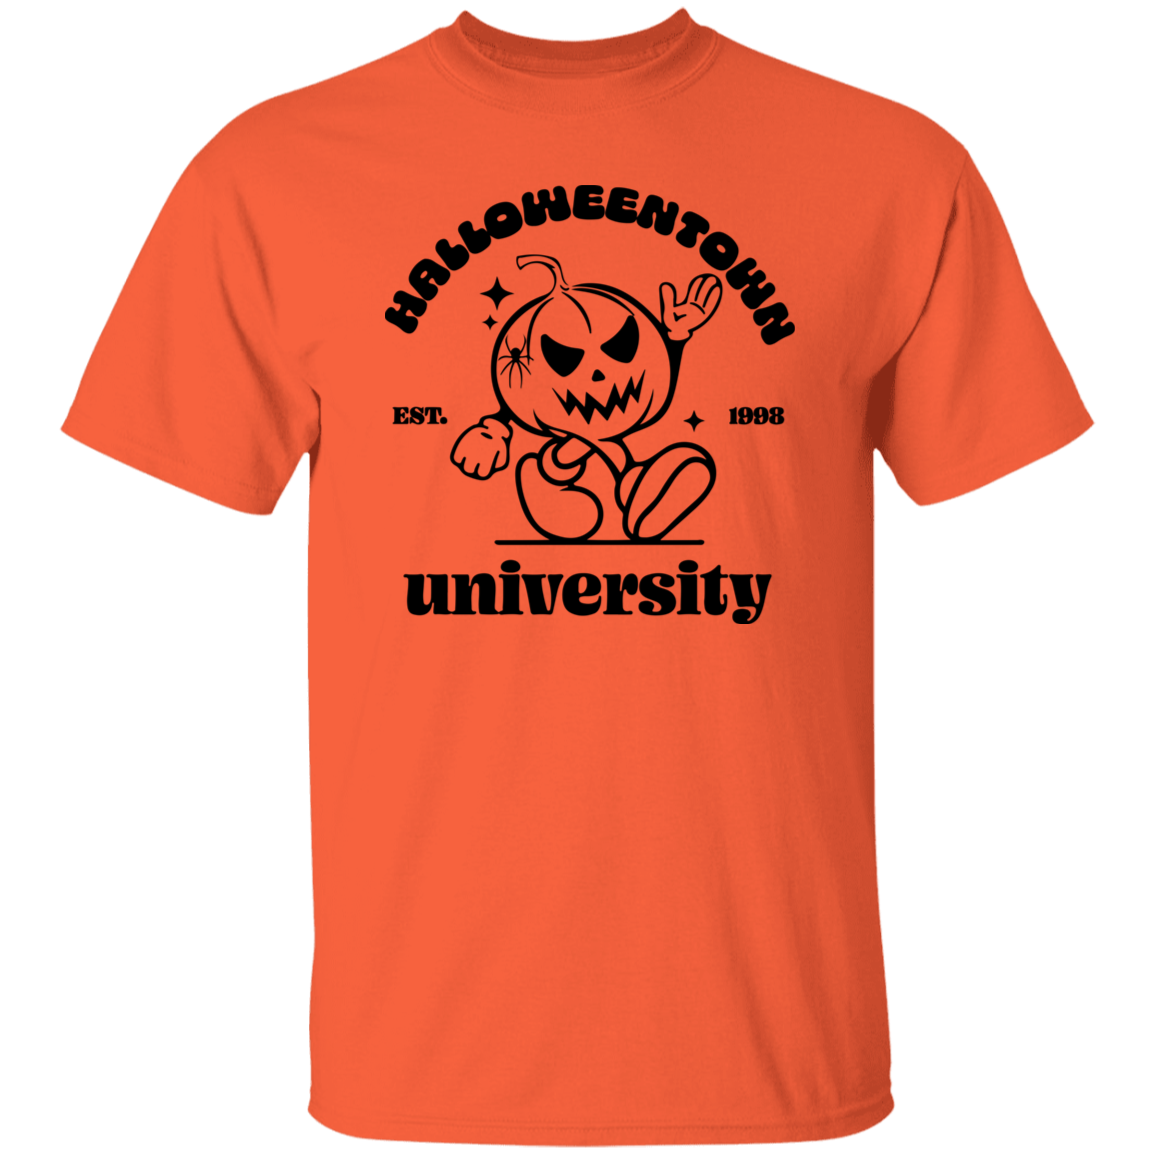 HalloweenTown University (Est. 1998)- Men's T-Shirt